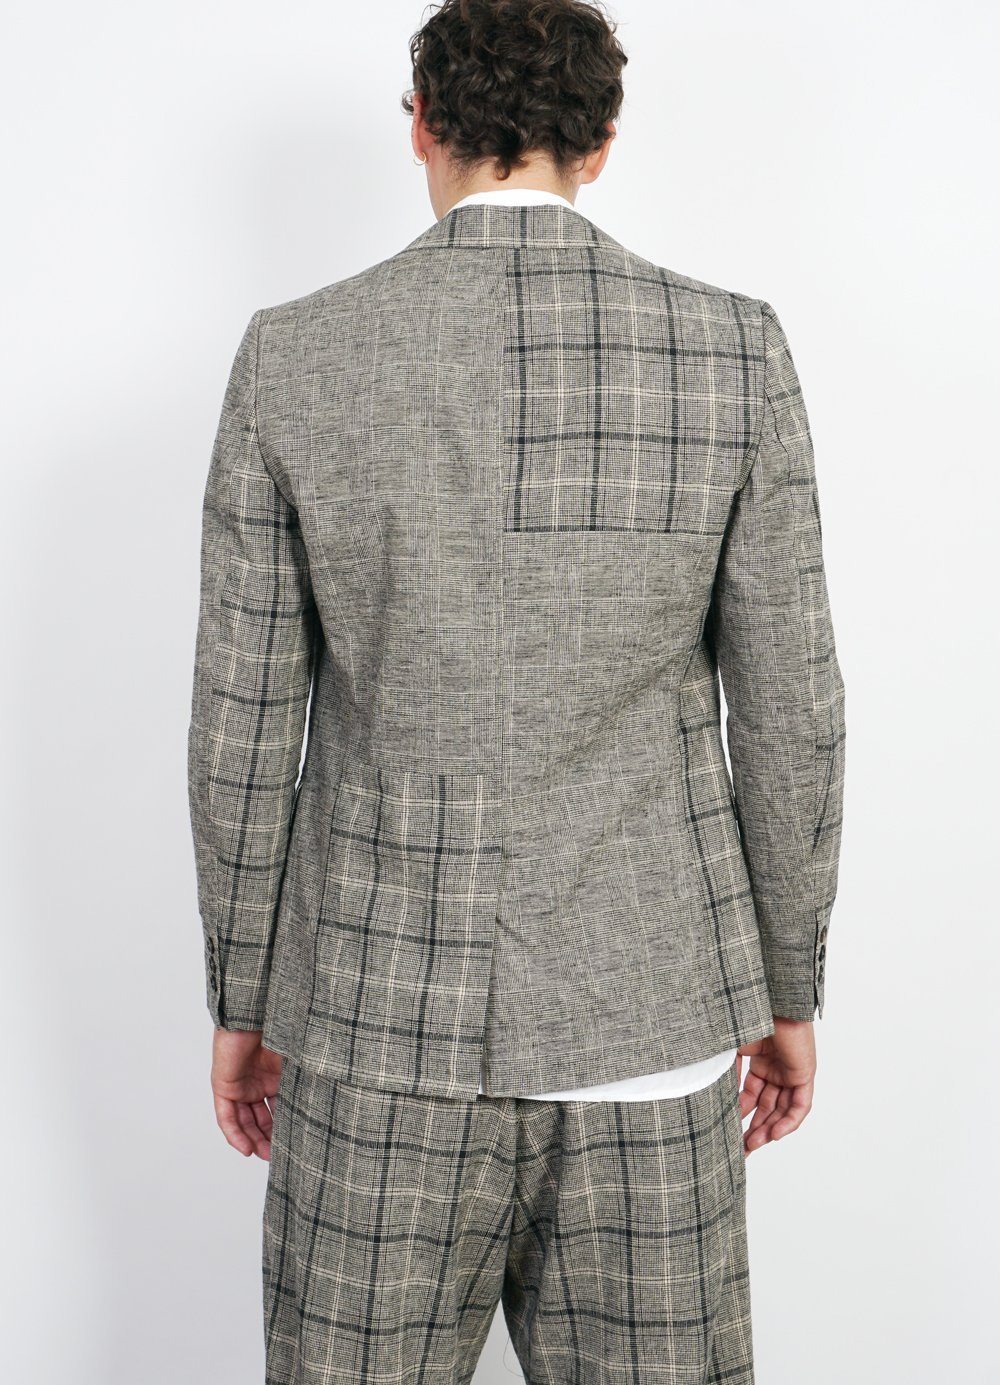 CHRISTOFFER | Two Button Blazer | Mixed Check -HANSEN Garments- HANSEN Garments